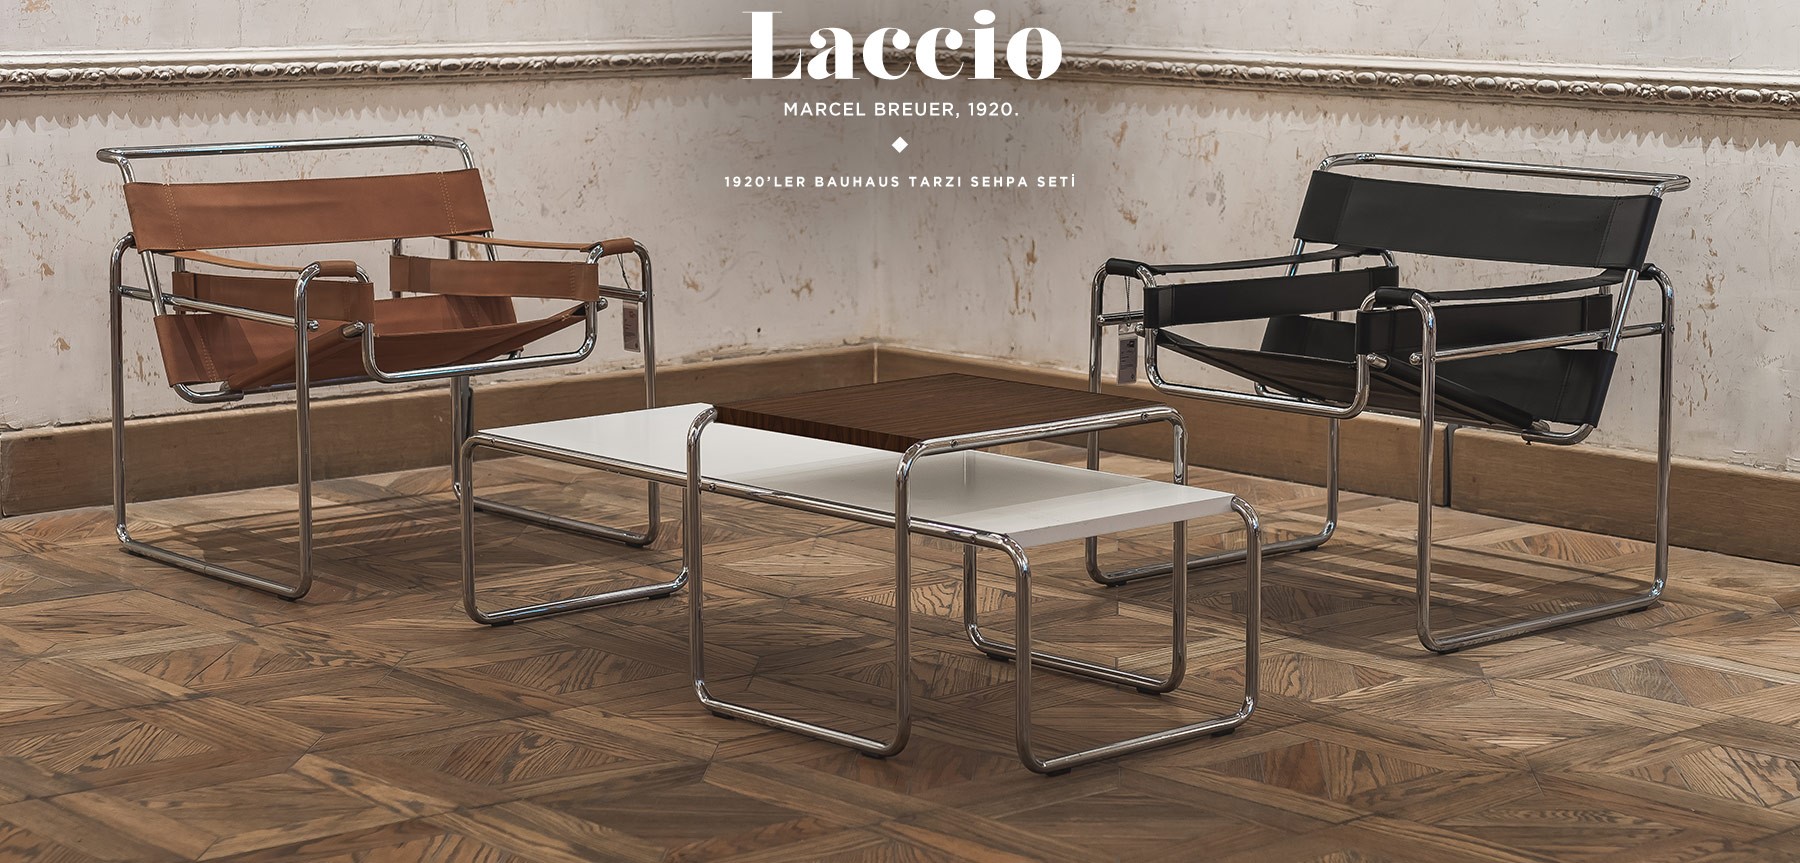 laccıo coffe table set'in resmi